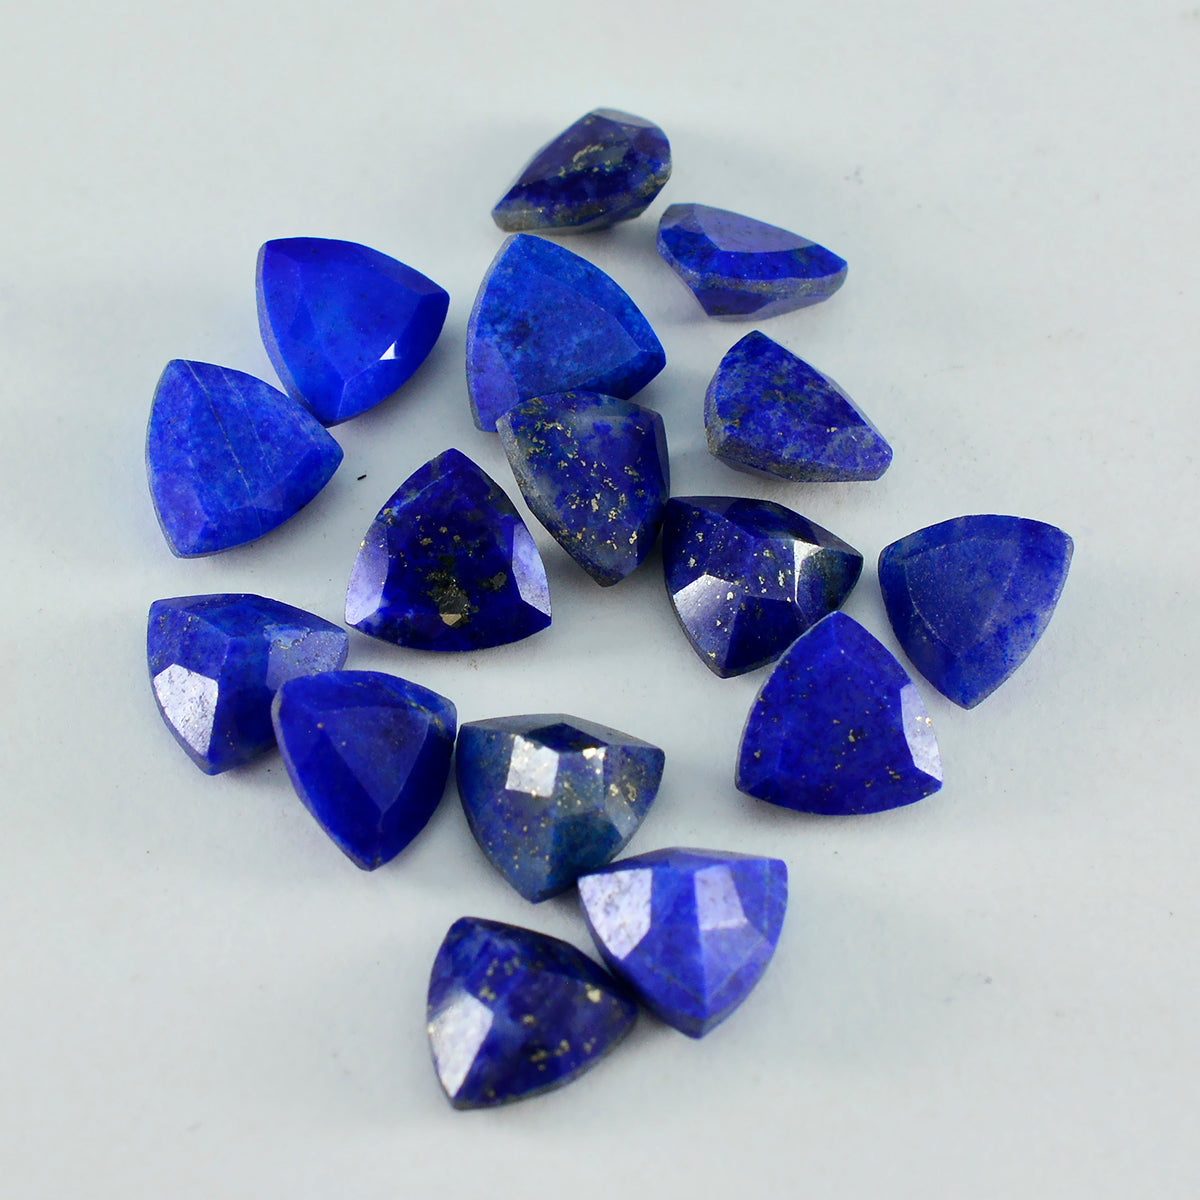 Riyogems 1PC Genuine Blue Lapis Lazuli Faceted 7x7 mm Trillion Shape beauty Quality Loose Gems